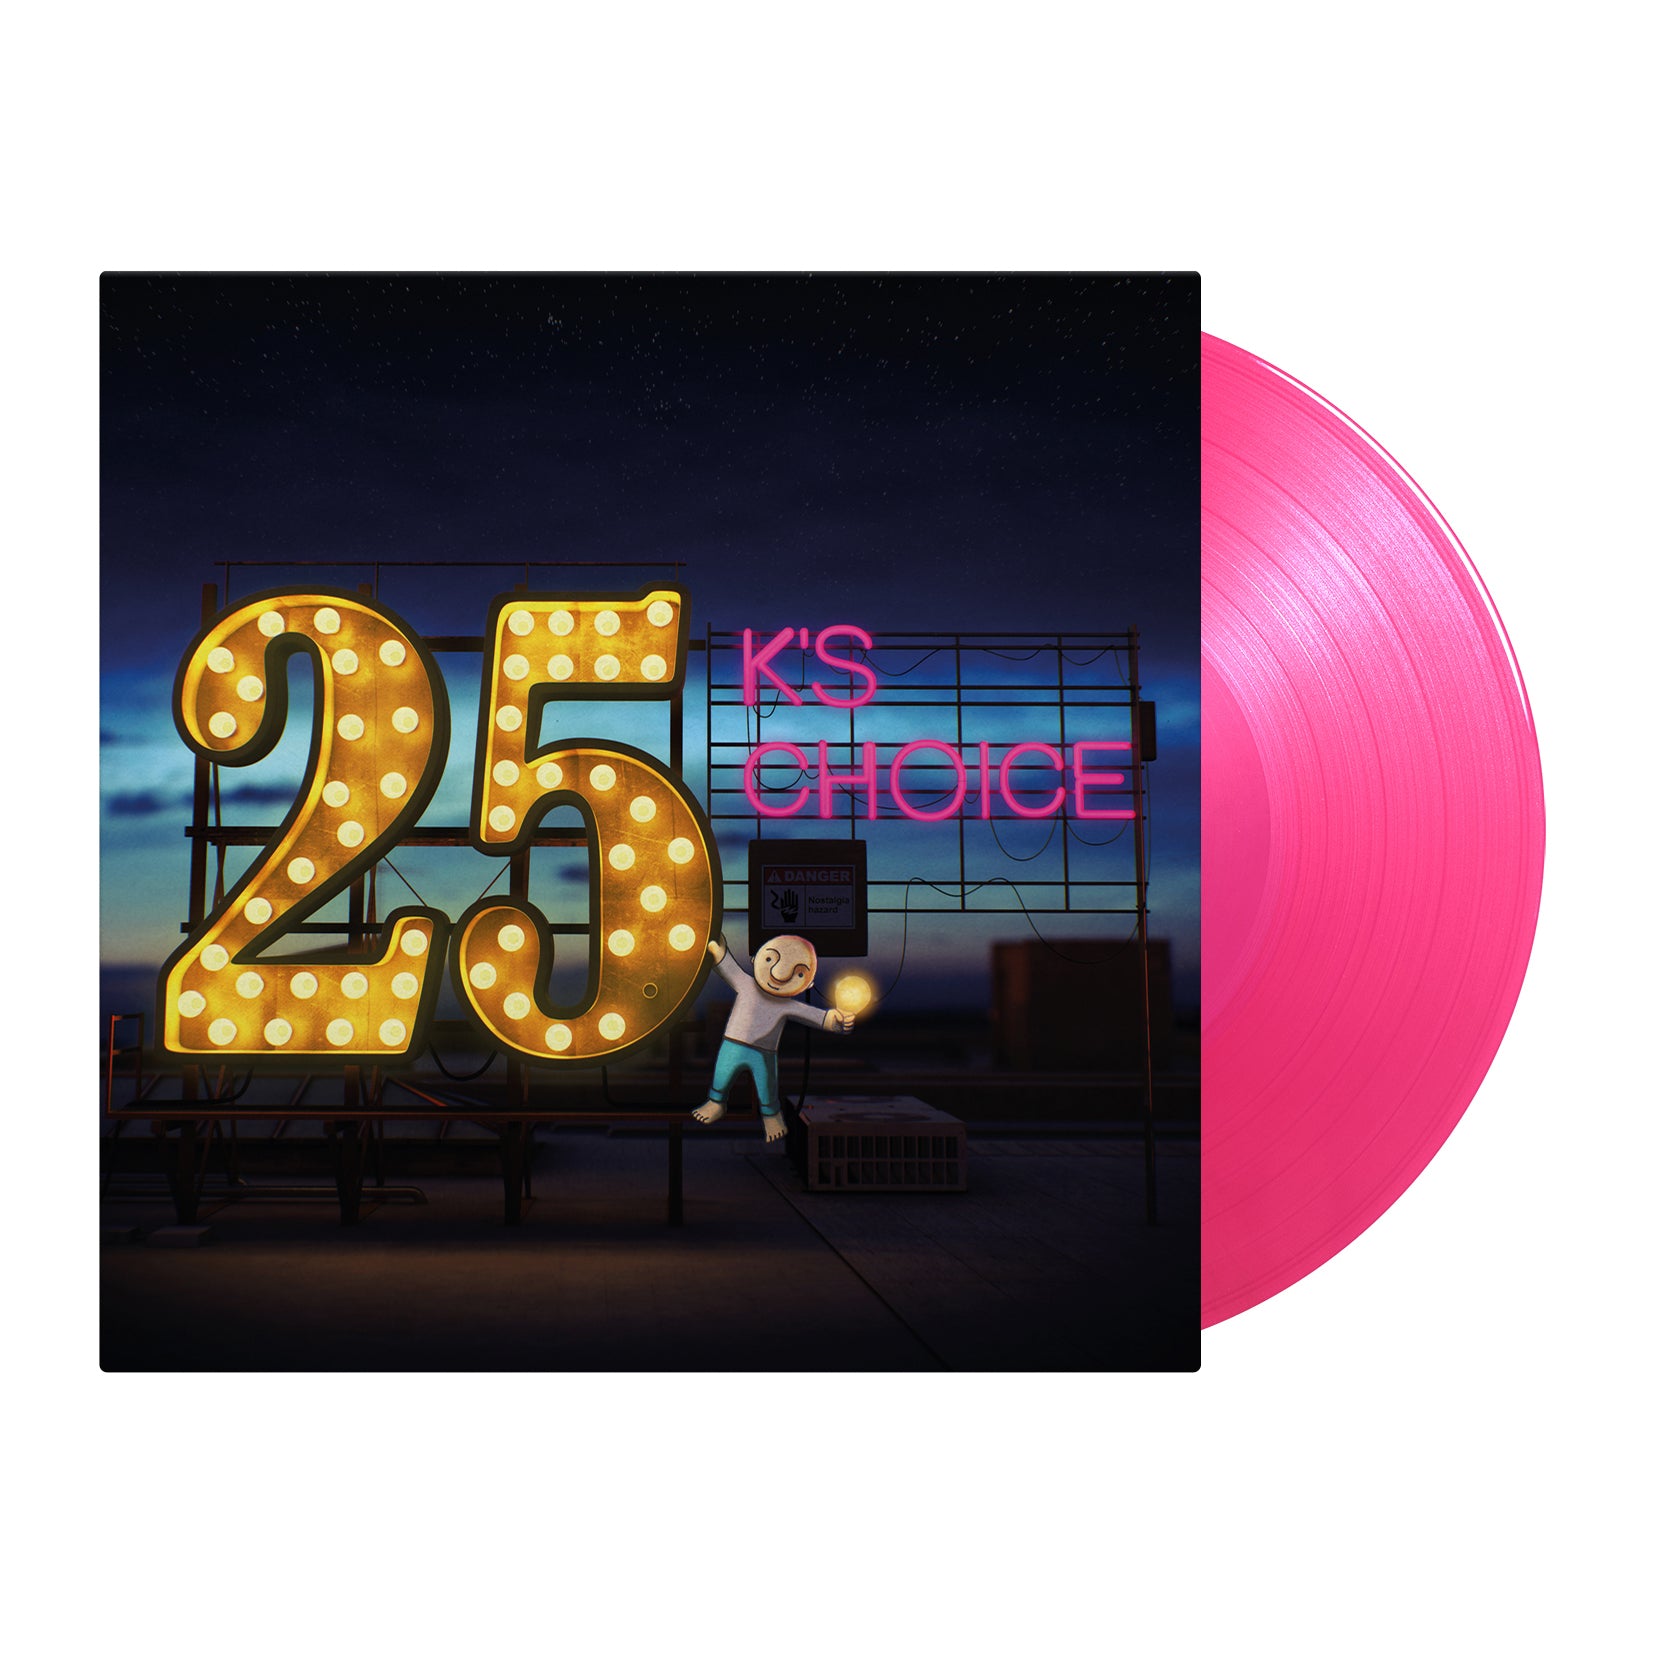 K's Choice - 25: Limited Translucent Pink Vinyl 2LP